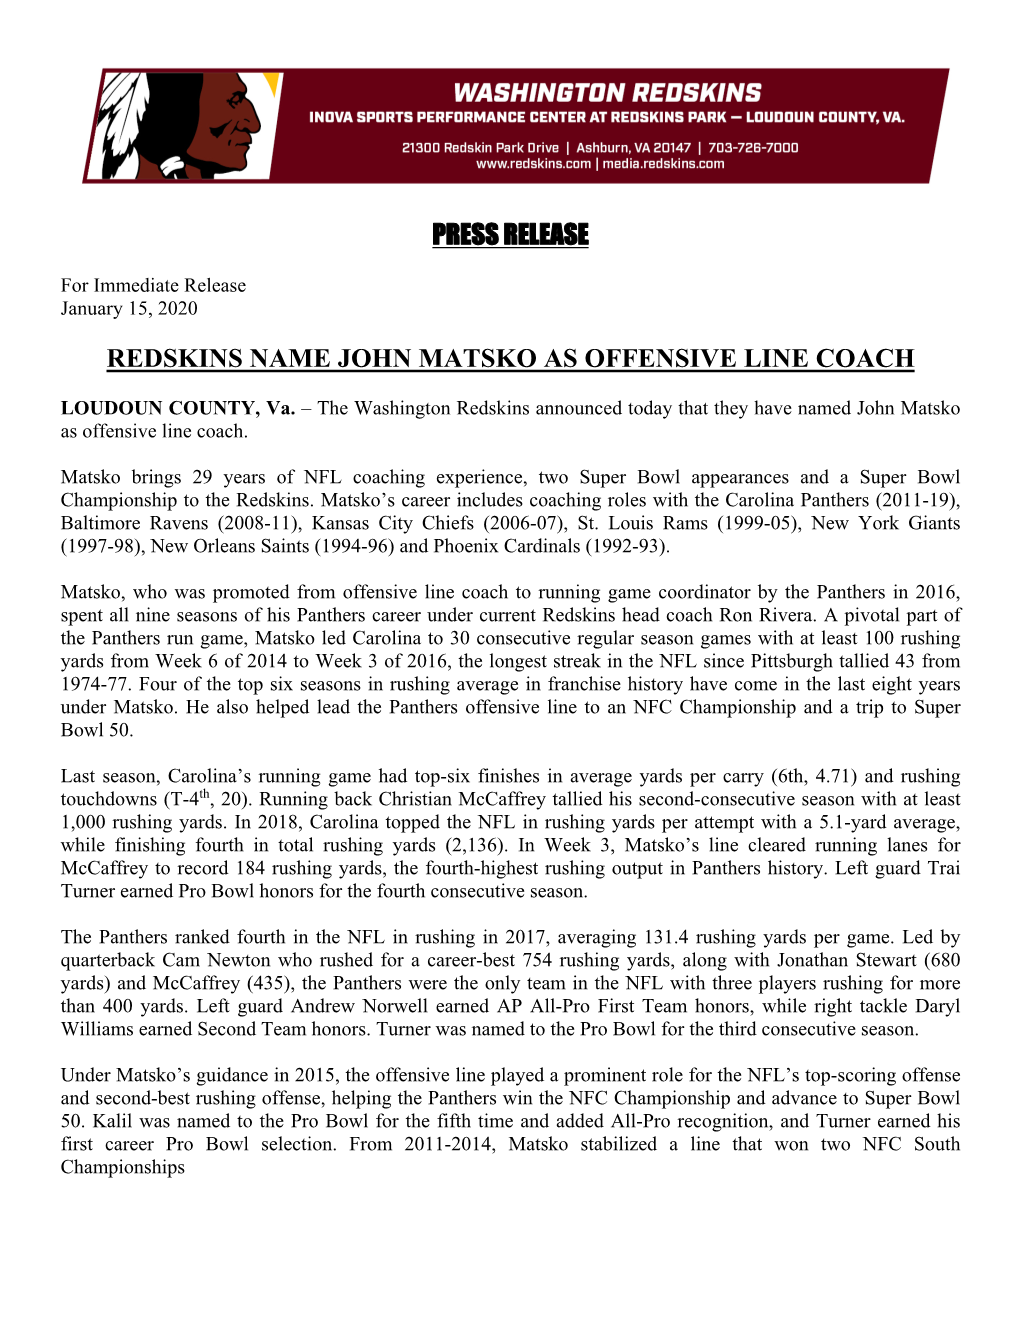 Press Release Redskins Name John Matsko As